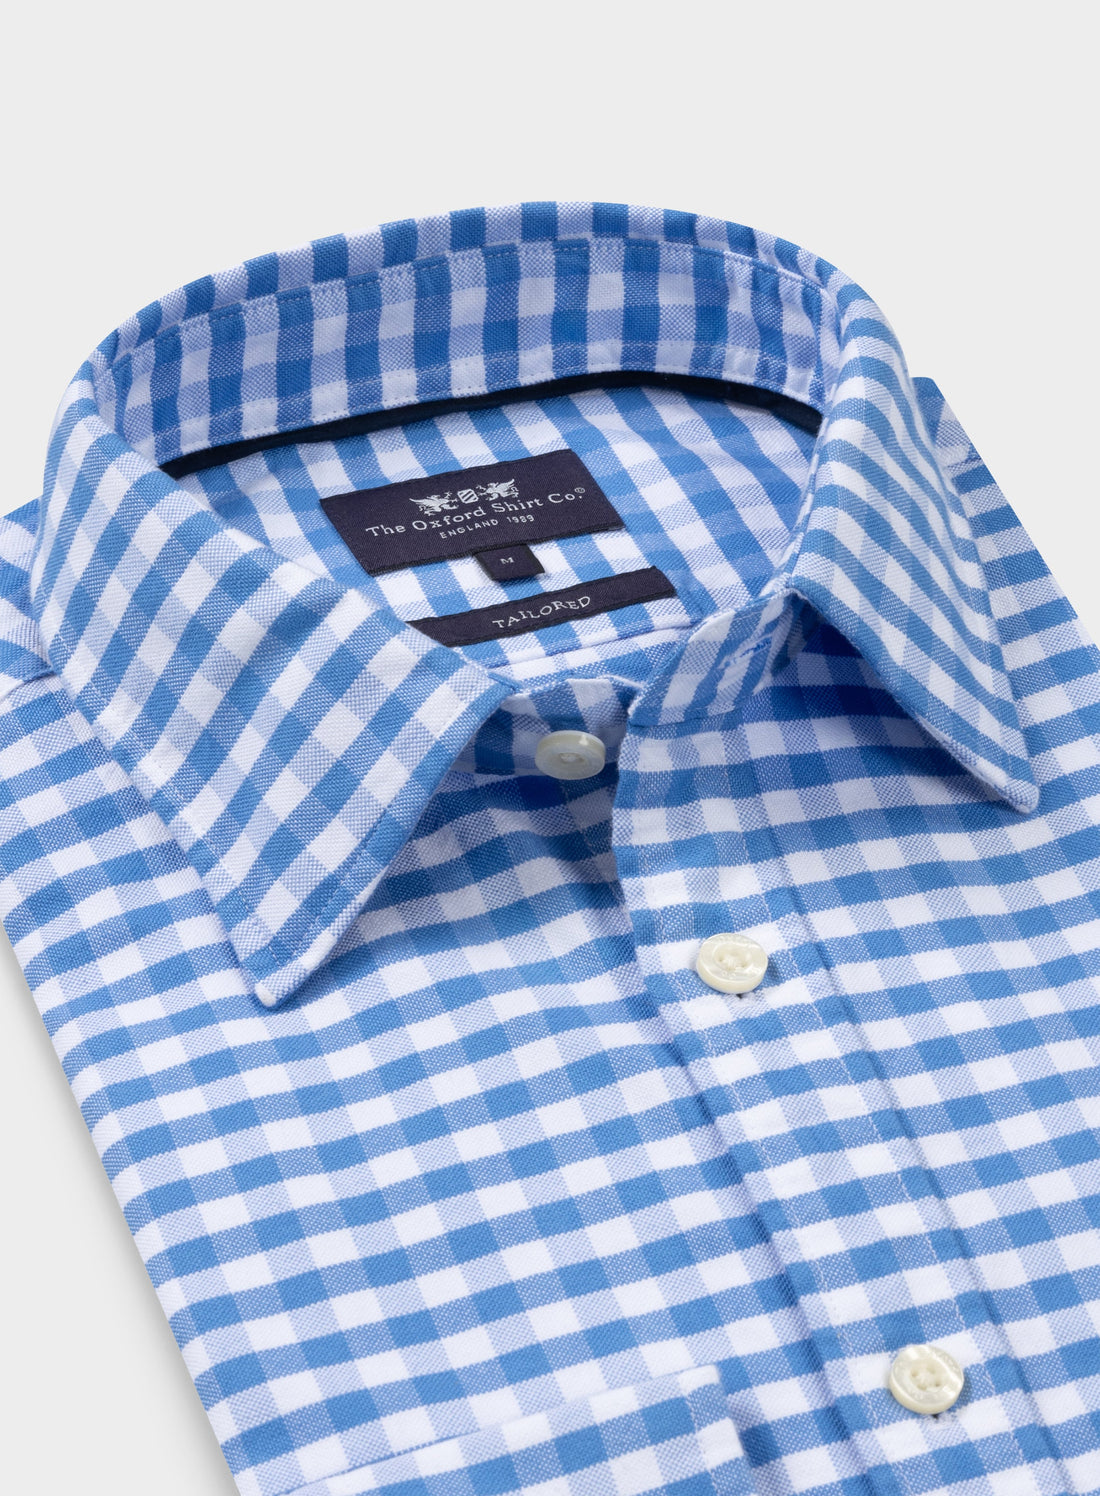 Mens Classic Oxford Shirt in Blue Check - Oxford Shirt Co.